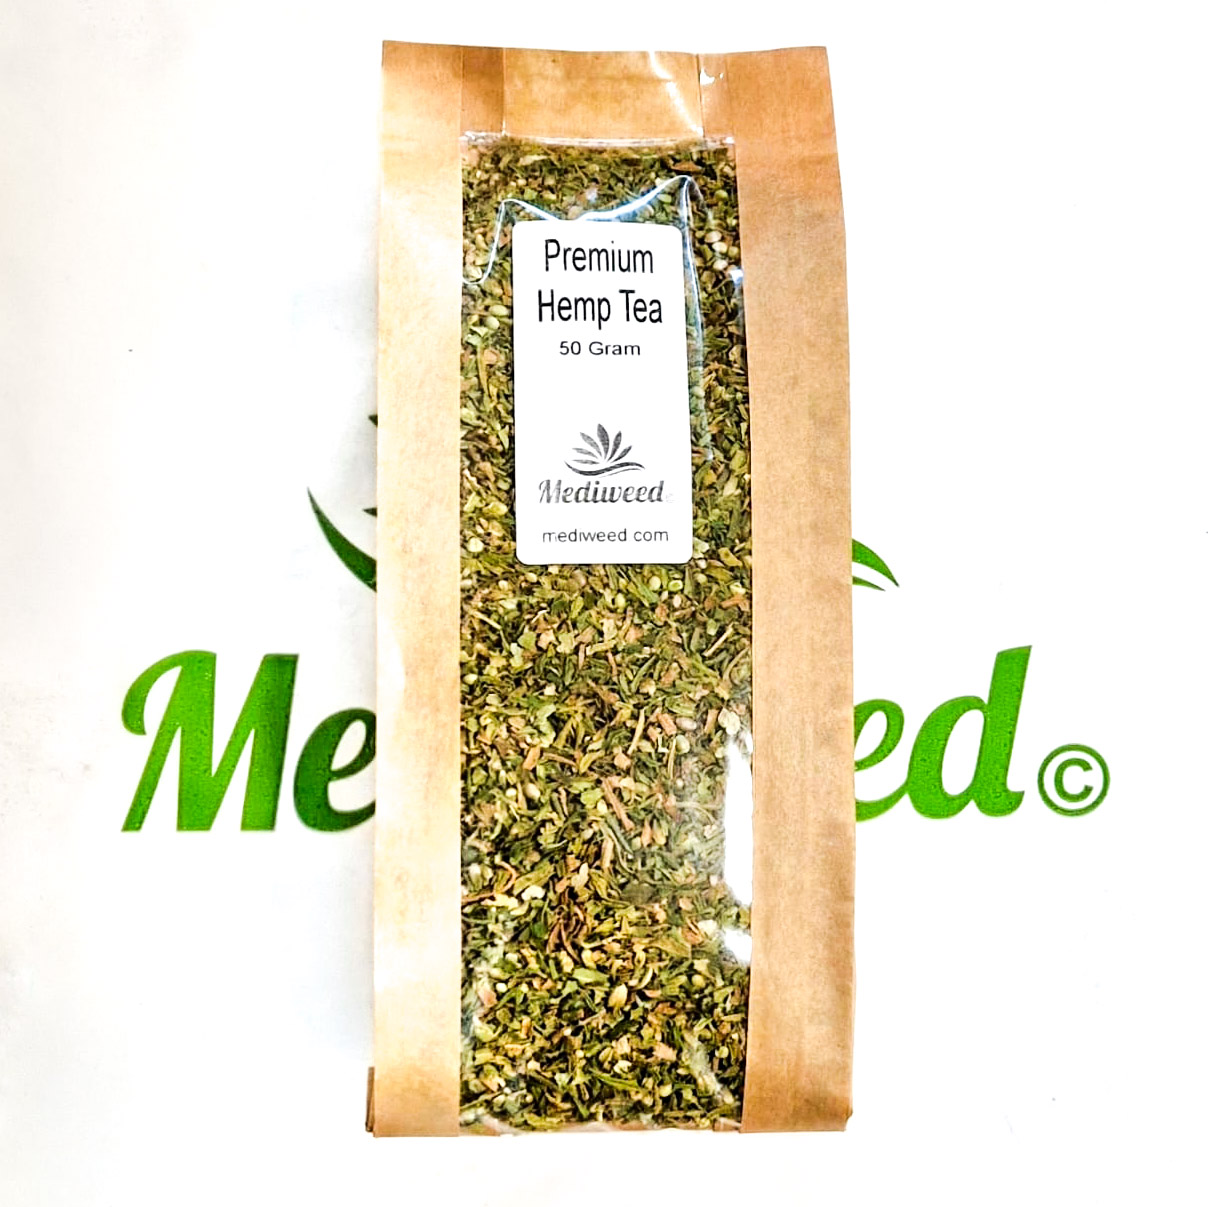 Premium hemp tea 50 gram